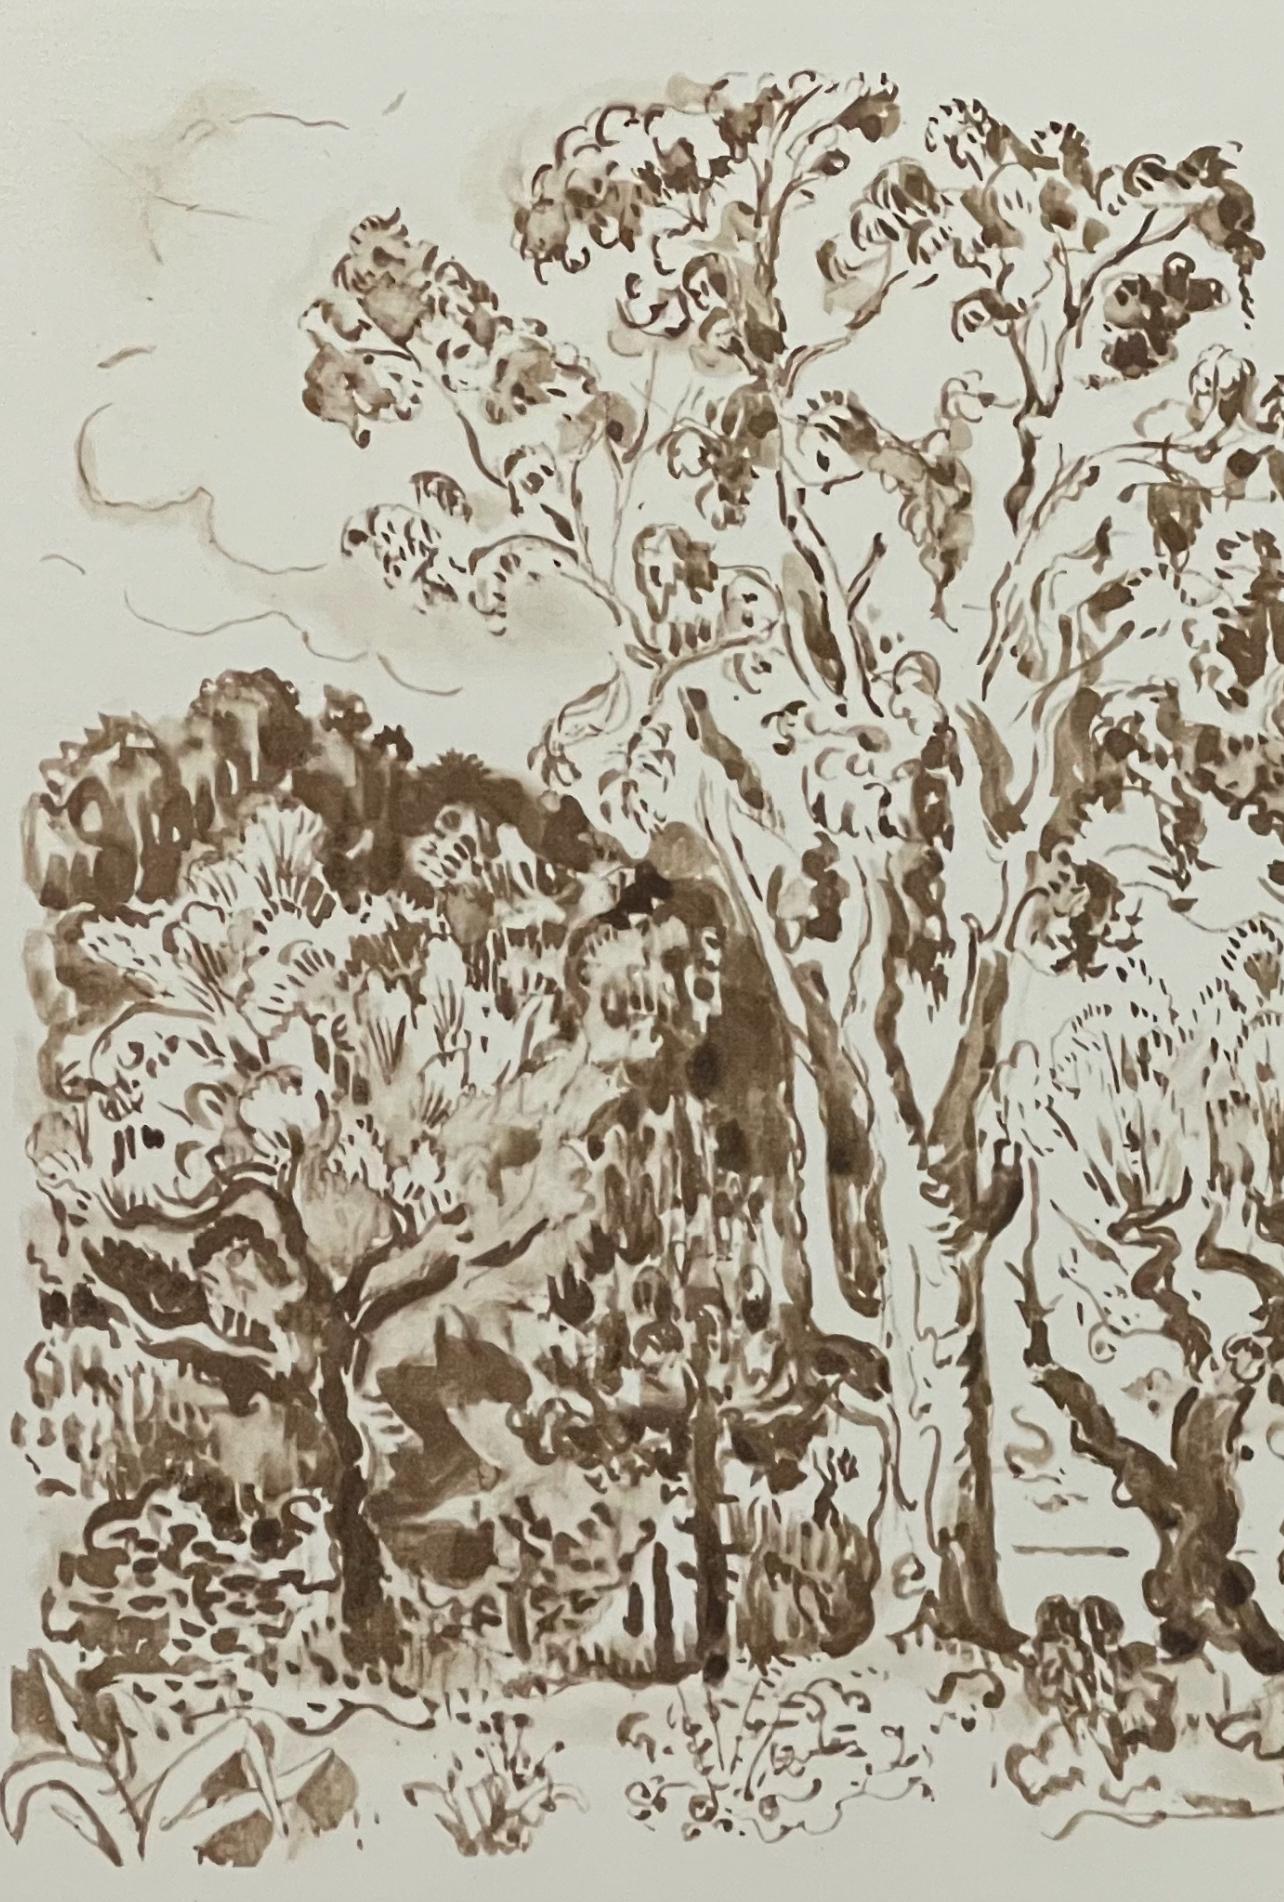 Signac, Antibes. L'eucalyptus, Signac Dessins (after) - Print by Paul Signac